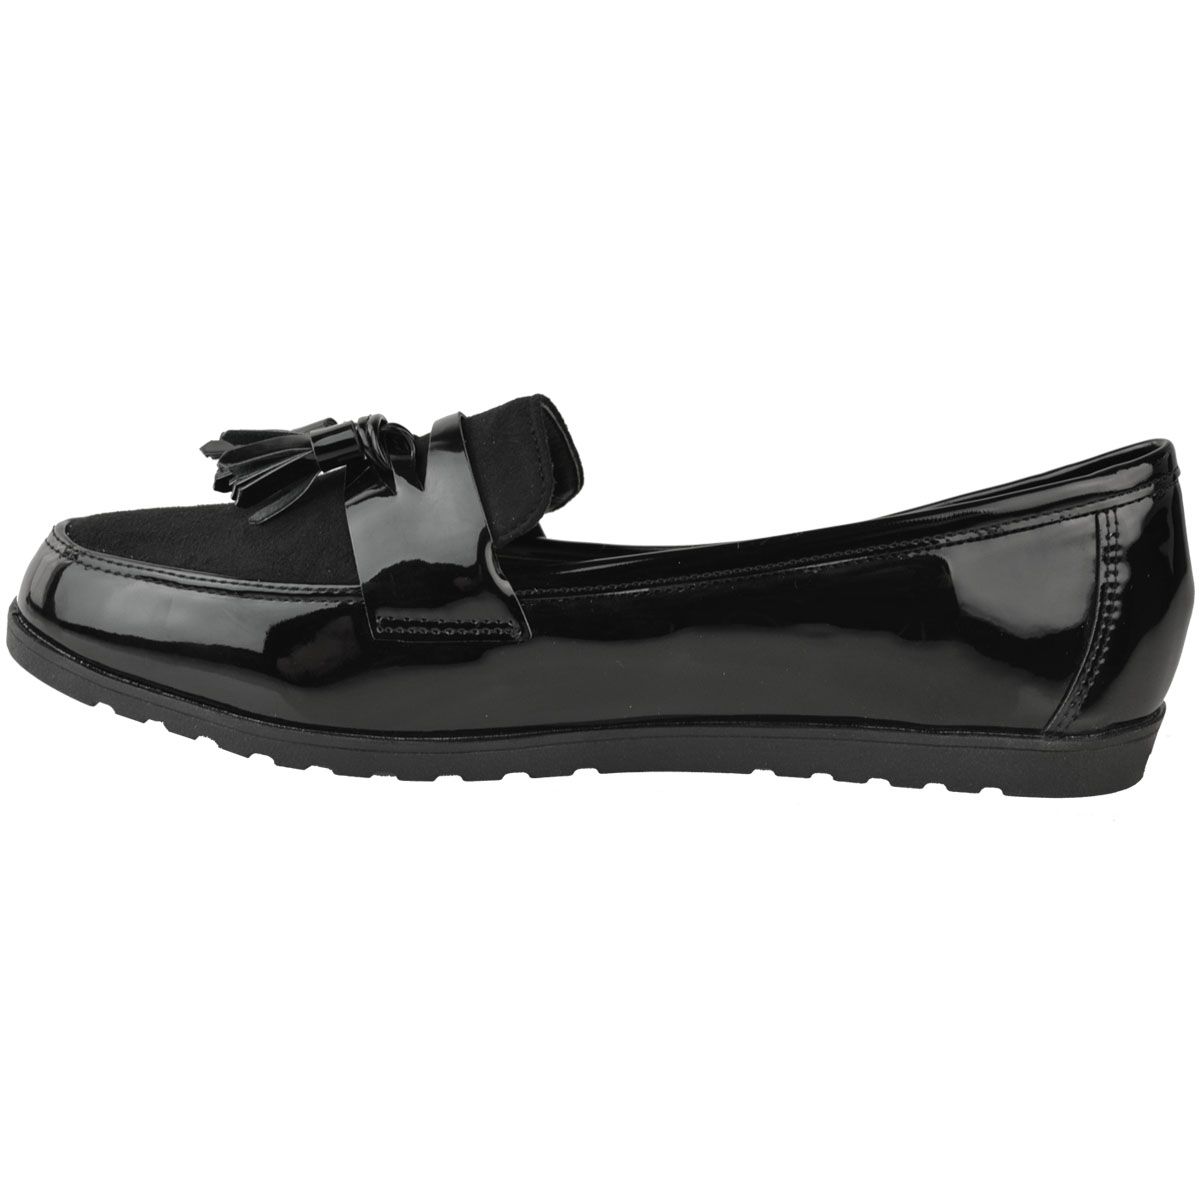 Black School Shoes Womens Ladies Girls Flat Formal Work Loafers Comfy ...